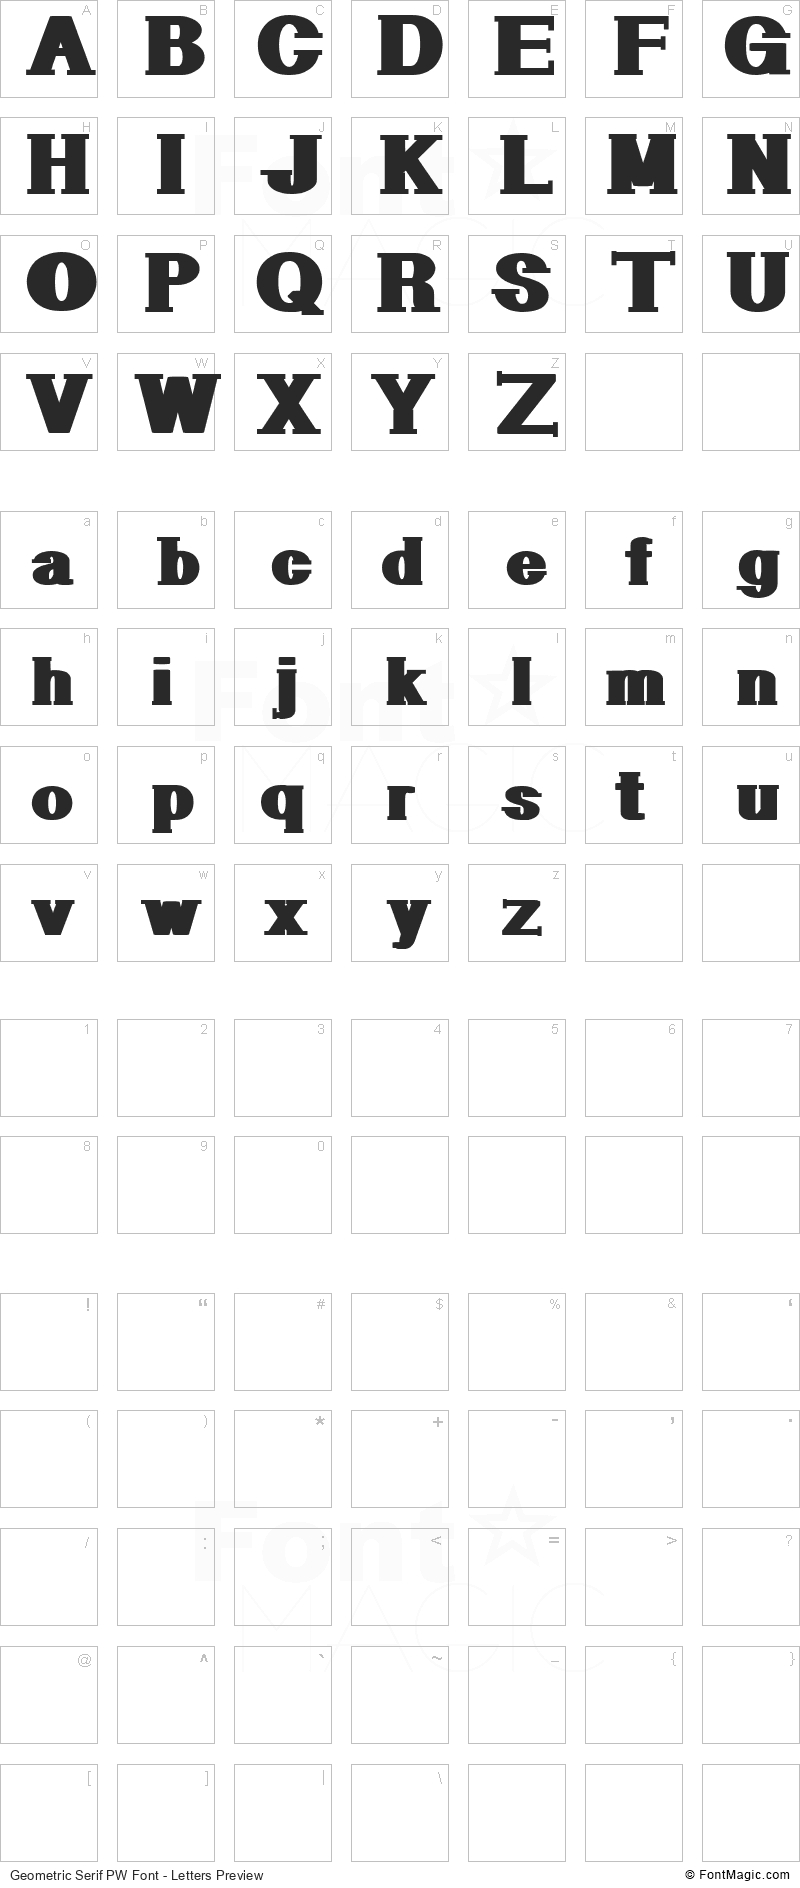 Geometric Serif PW Font - All Latters Preview Chart